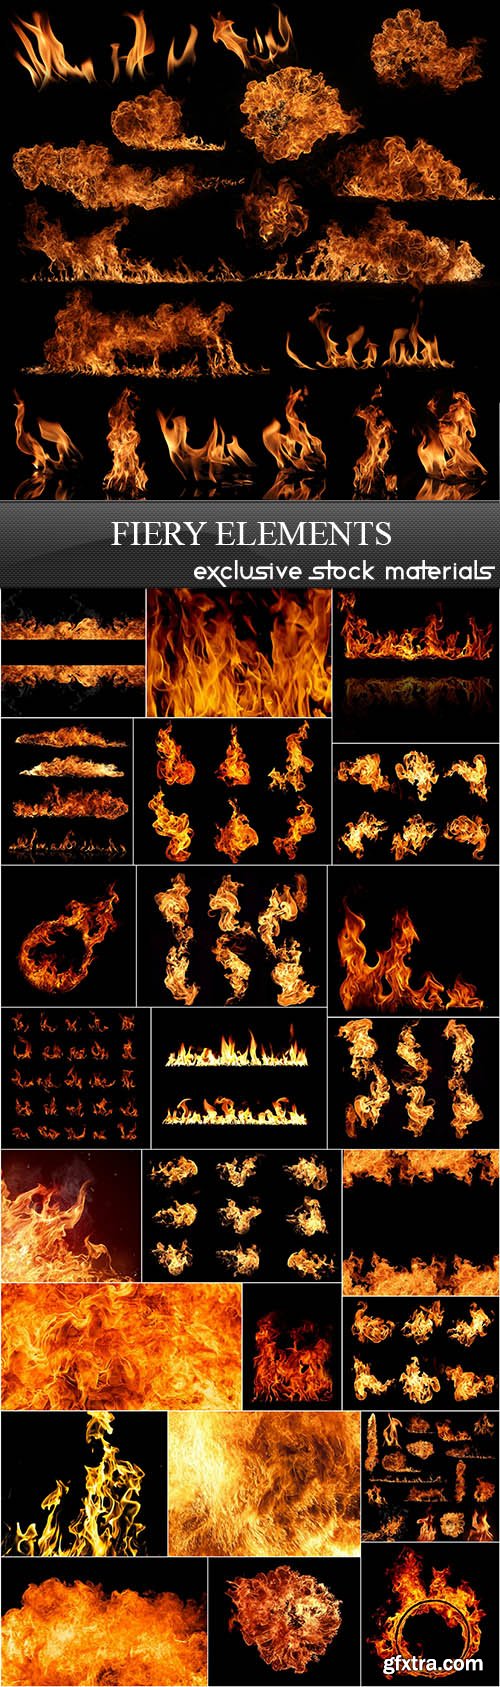 Fiery Elements, 25xUHQ JPEG